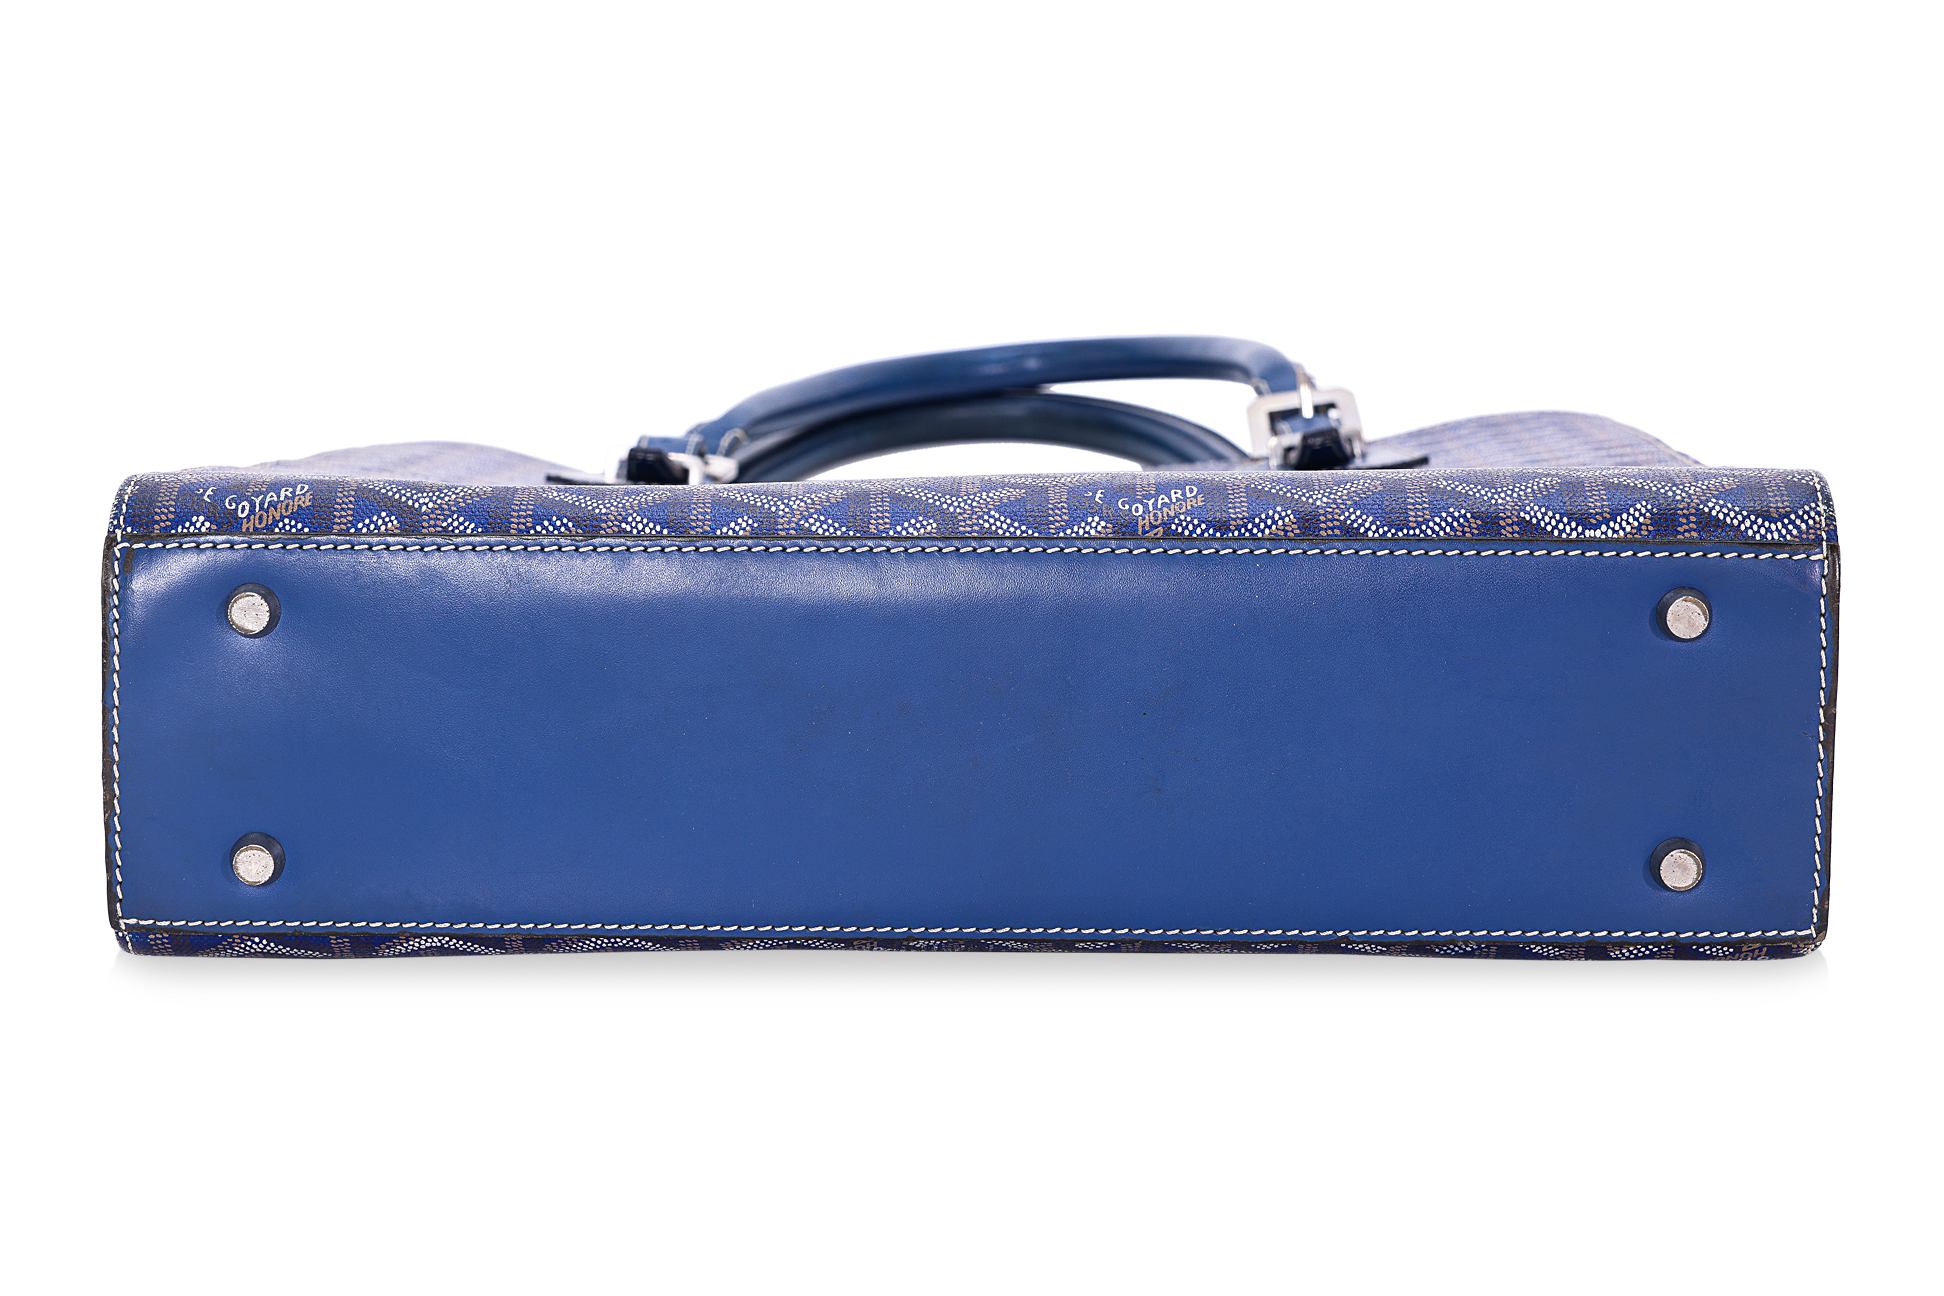 A GOYARD BLUE COMOR GM TOTE BAG - Image 3 of 16